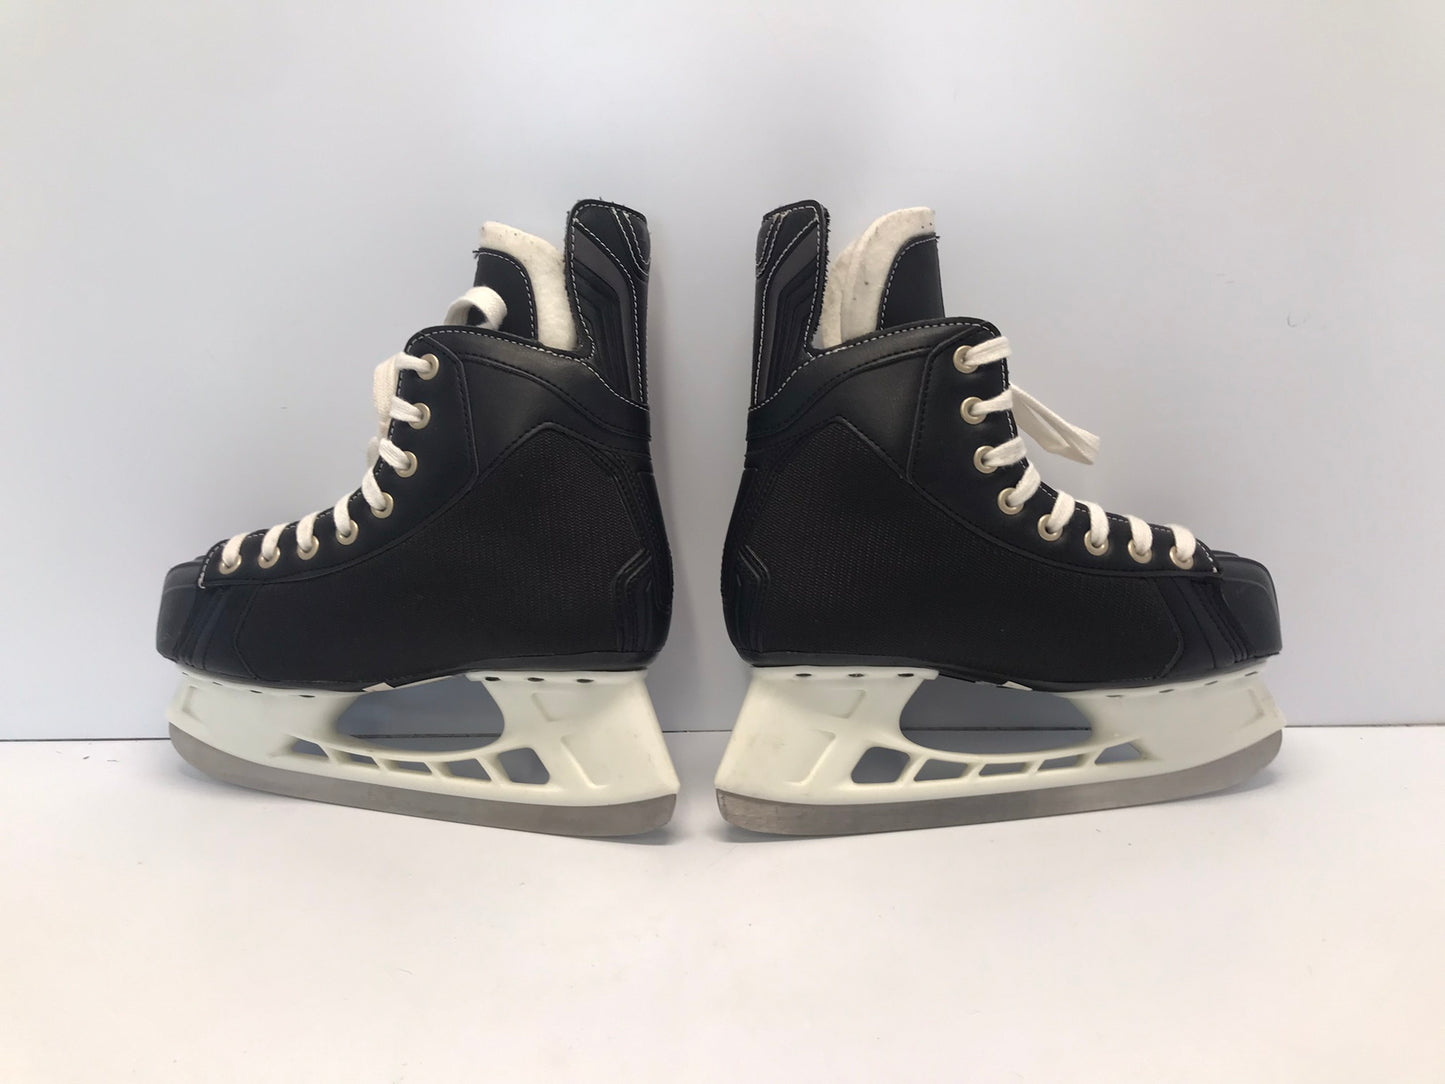 Hockey Skates Men's Size 6 Shoe 5 Skate Size Itech New